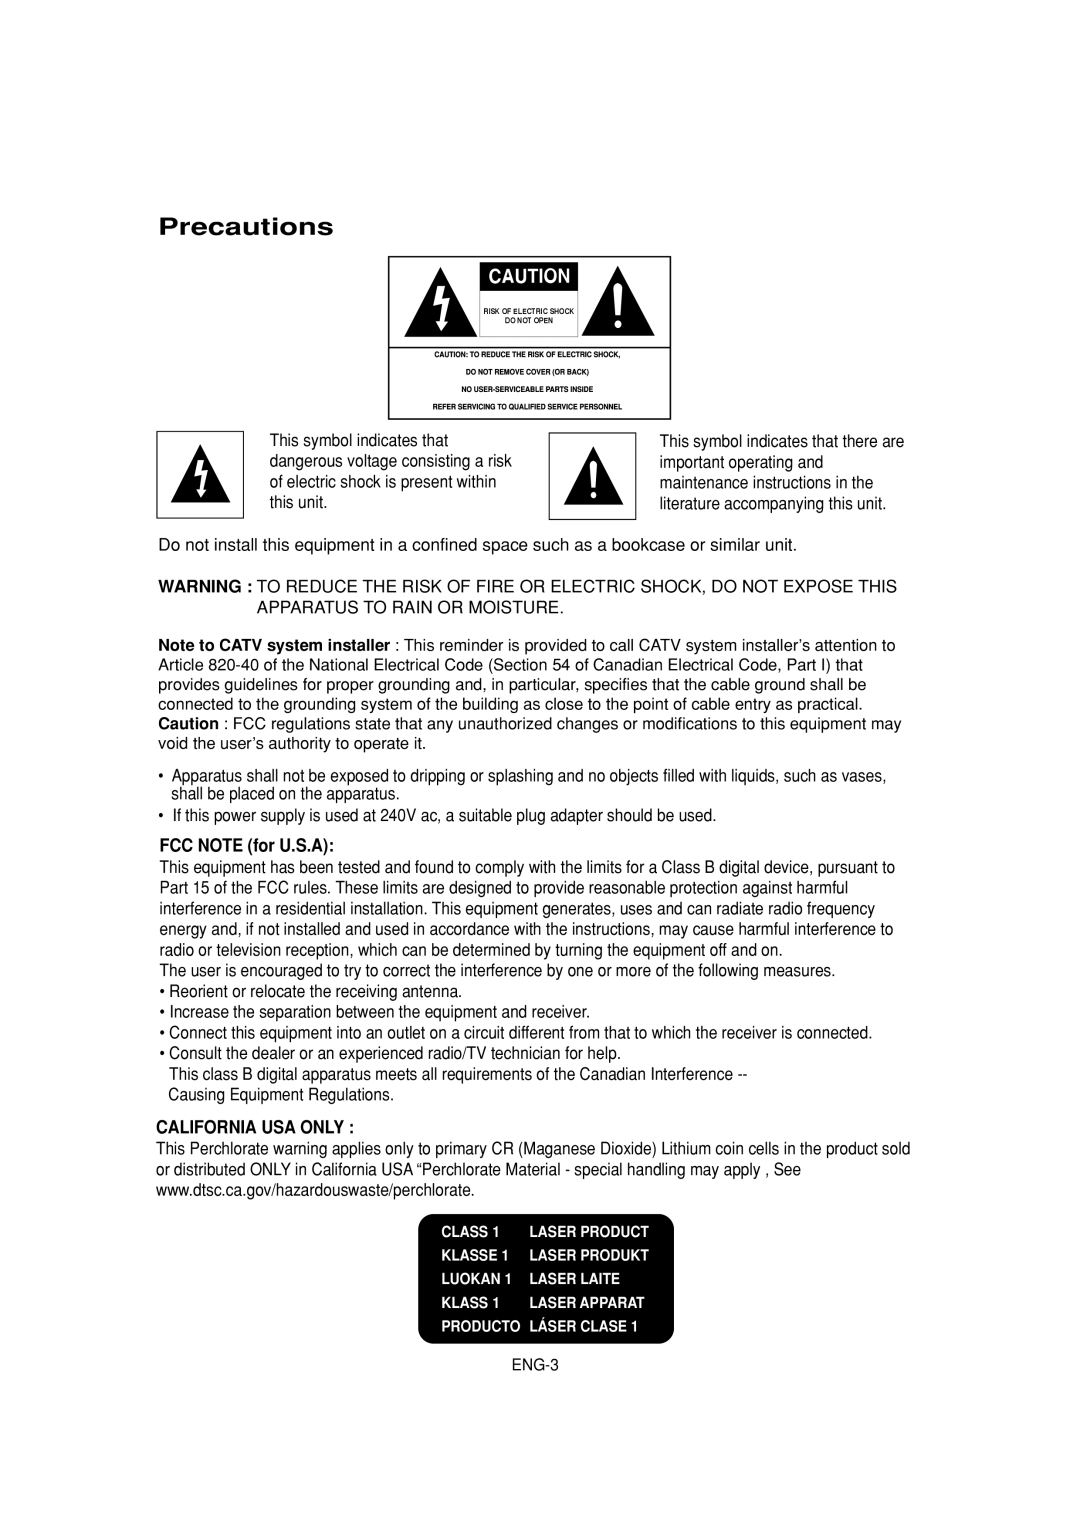 Samsung DVD-P181 manual Precautions, FCC NOTE for U.S.A, California Usa Only 